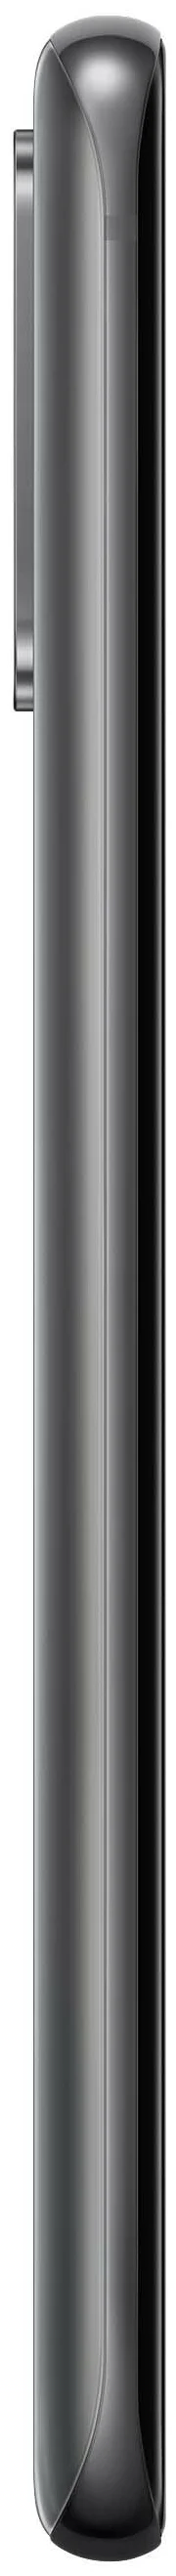 Samsung Galaxy S20 - аккумулятор: 4000 мА·ч